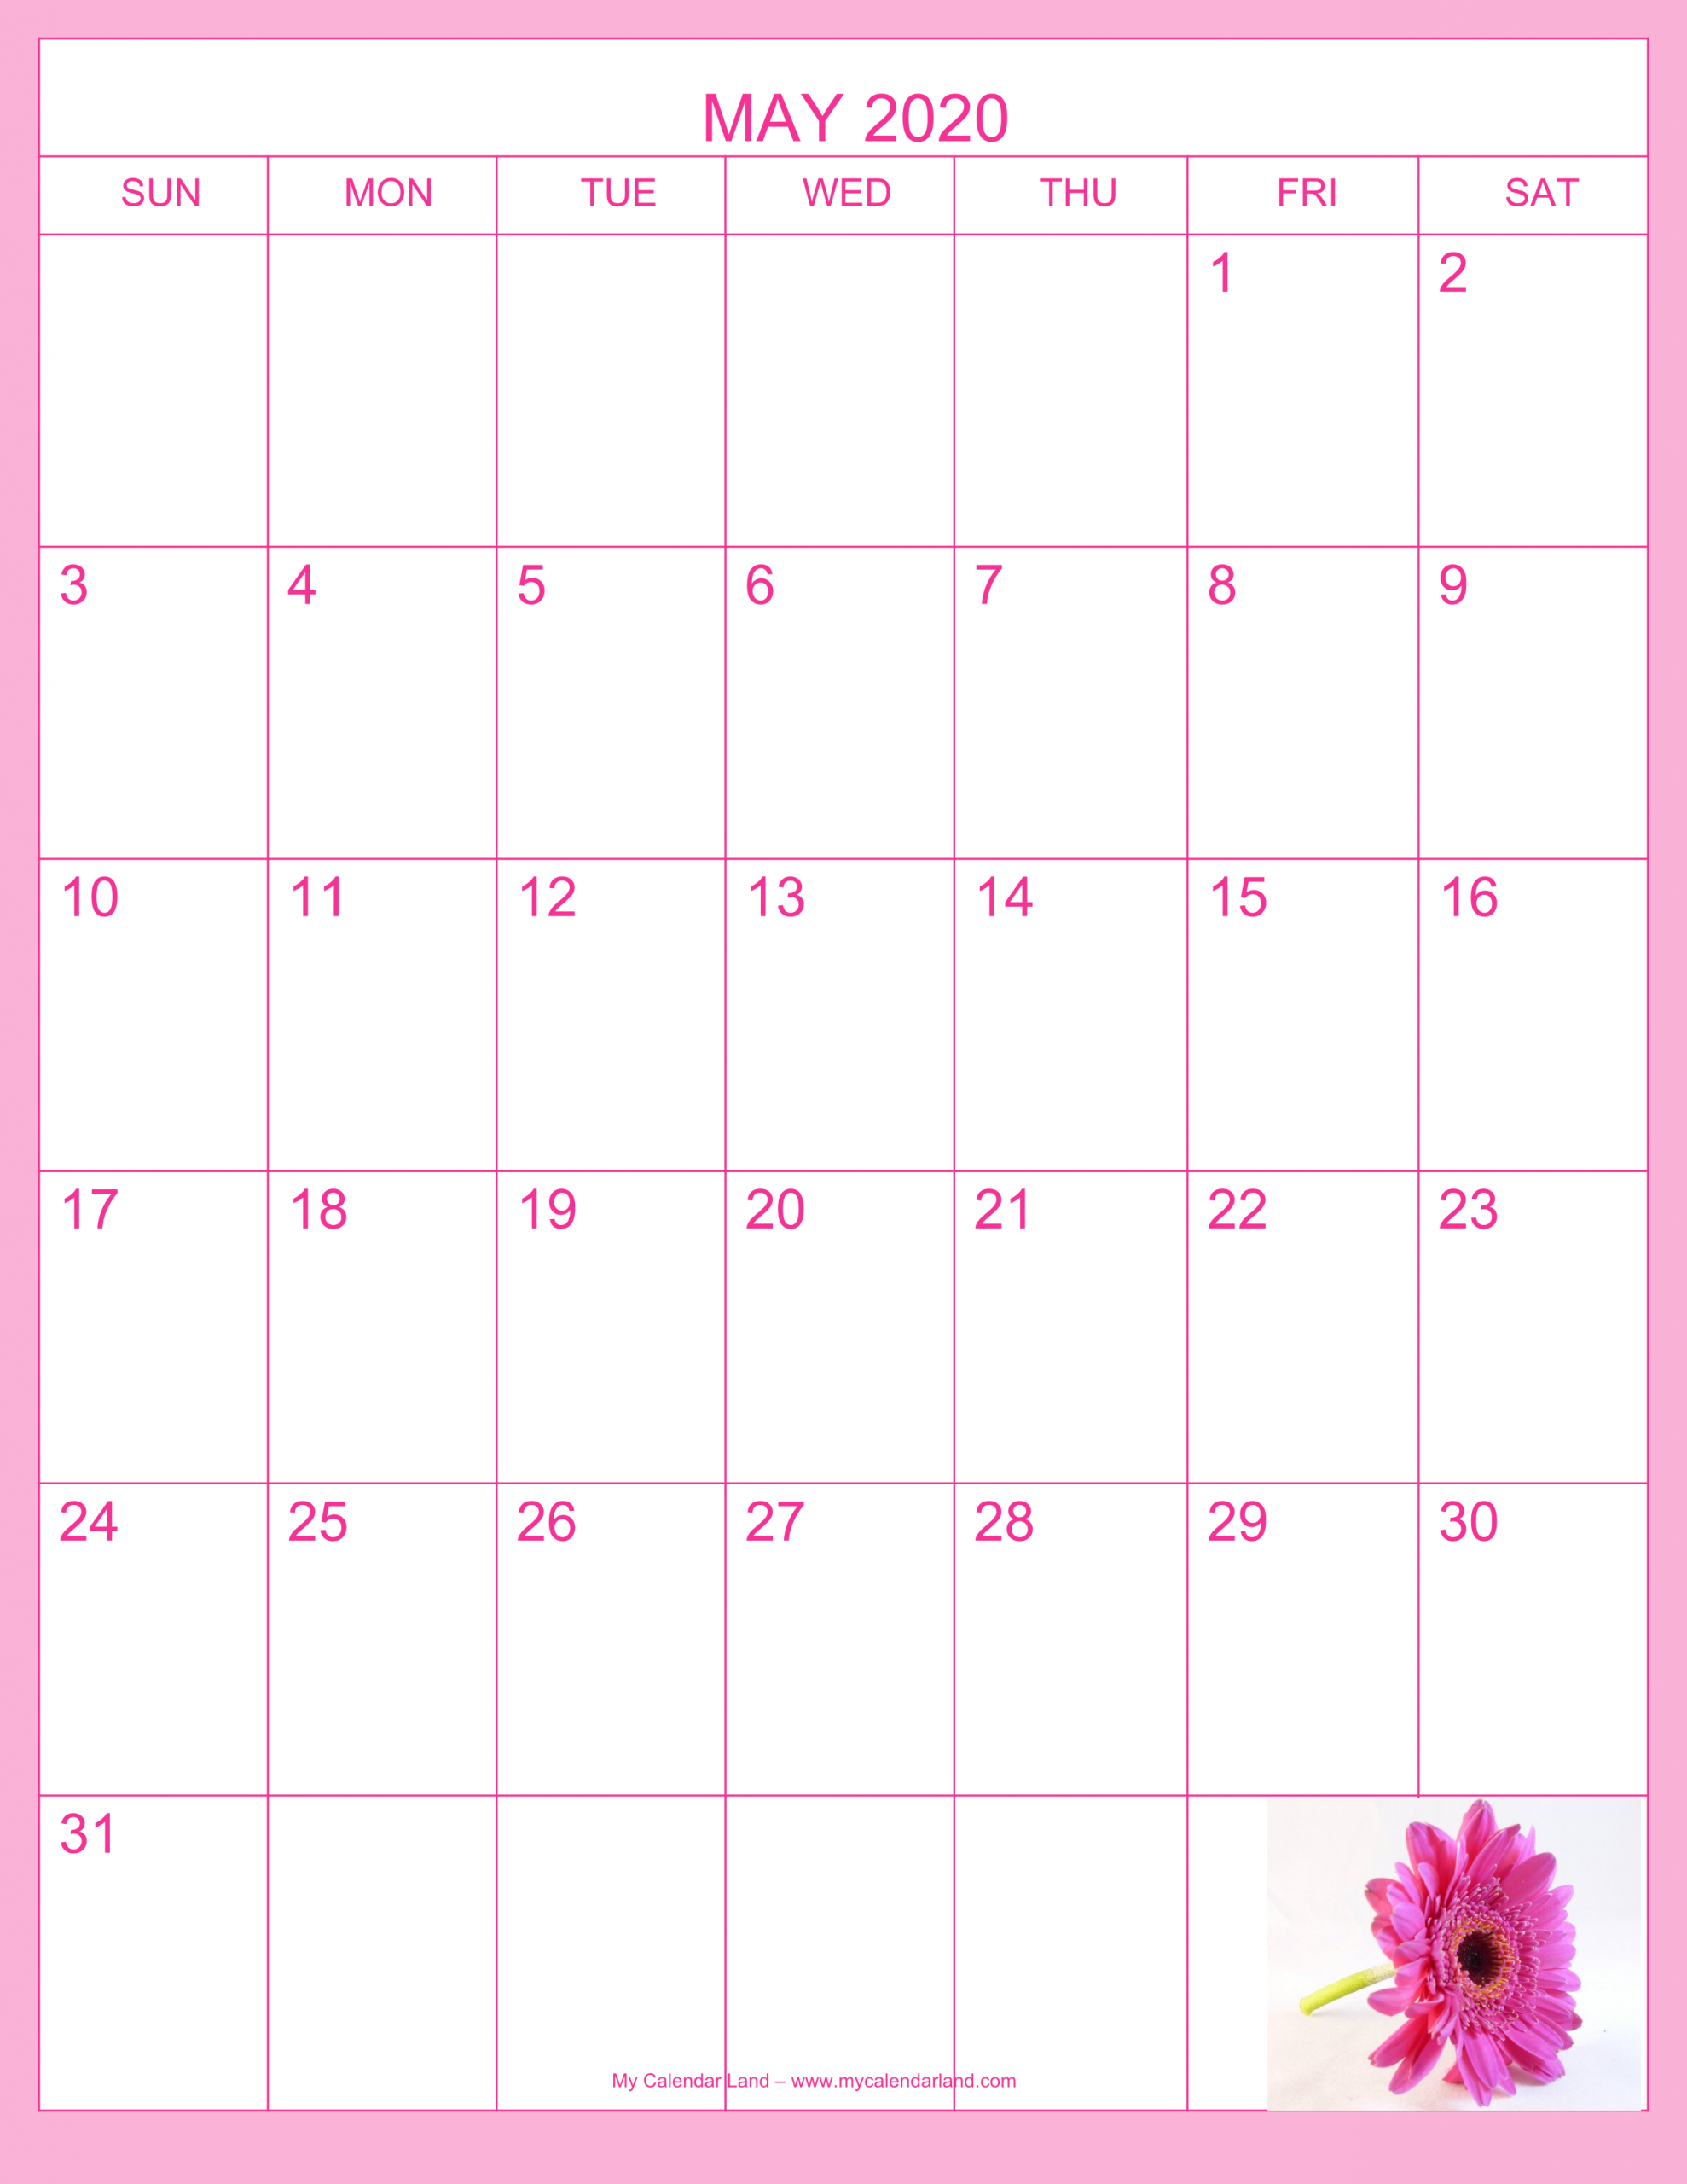 May 2020 Calendar - My Calendar Land